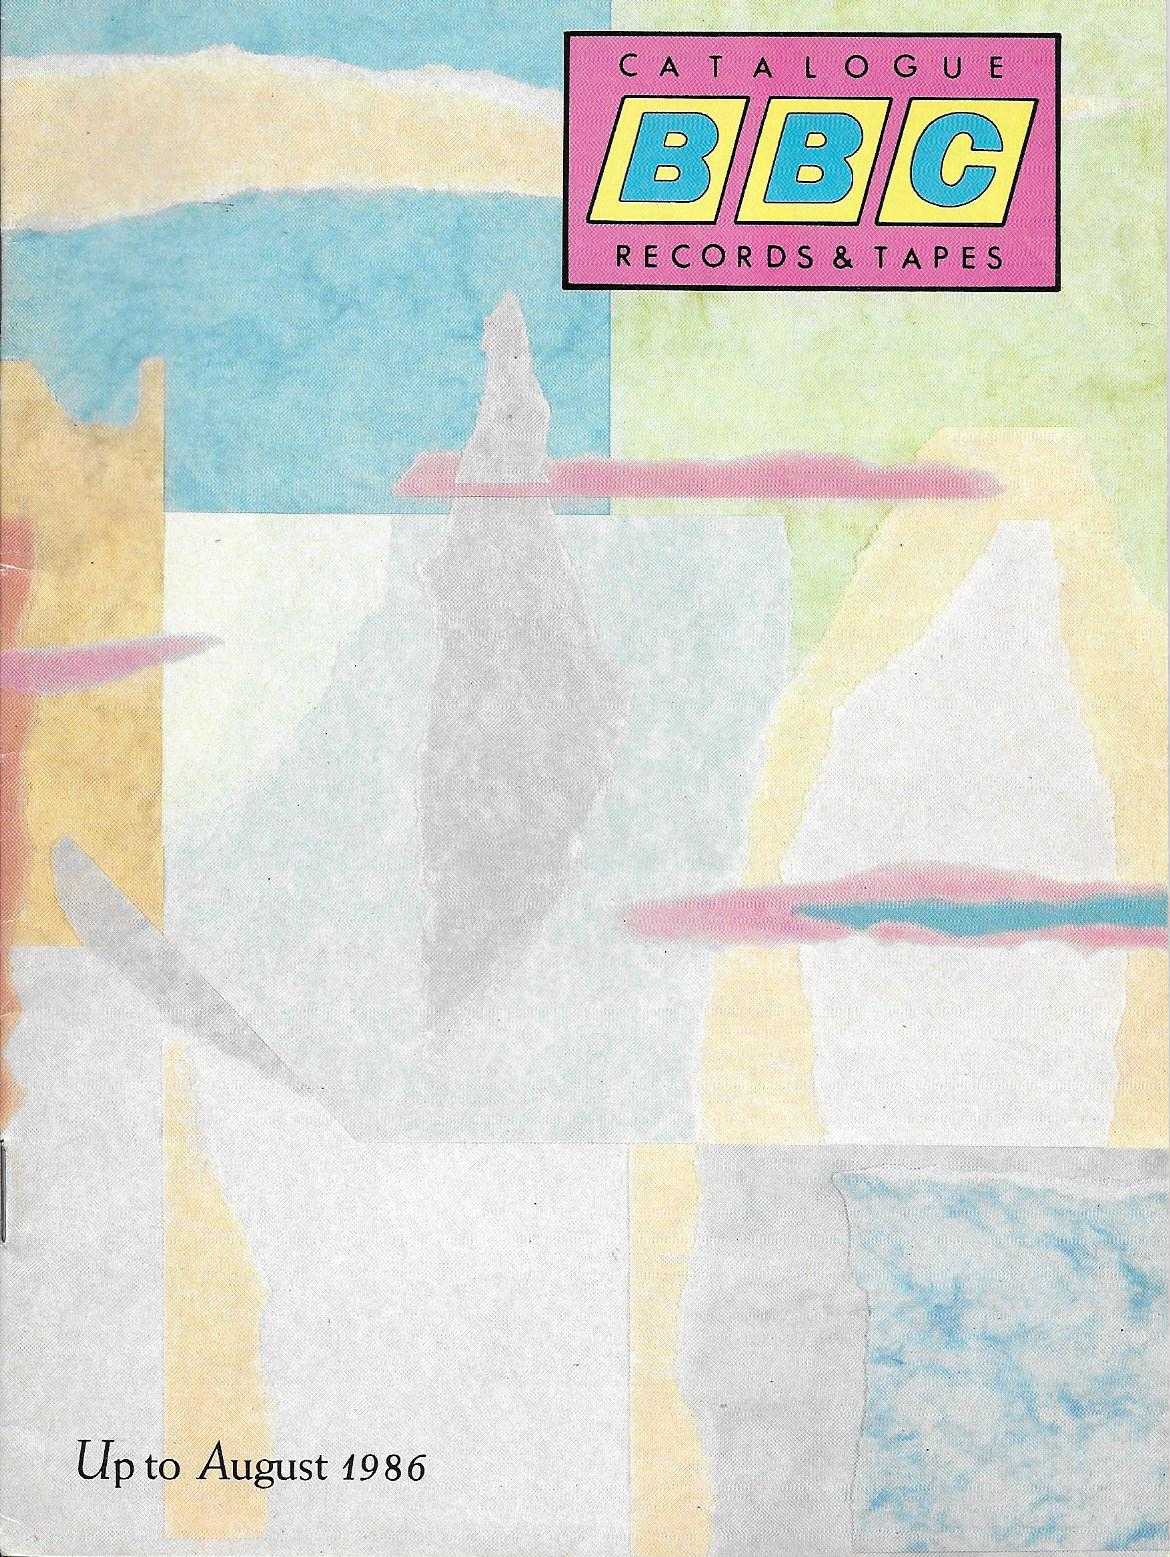 BBC Records catalogue 1986.